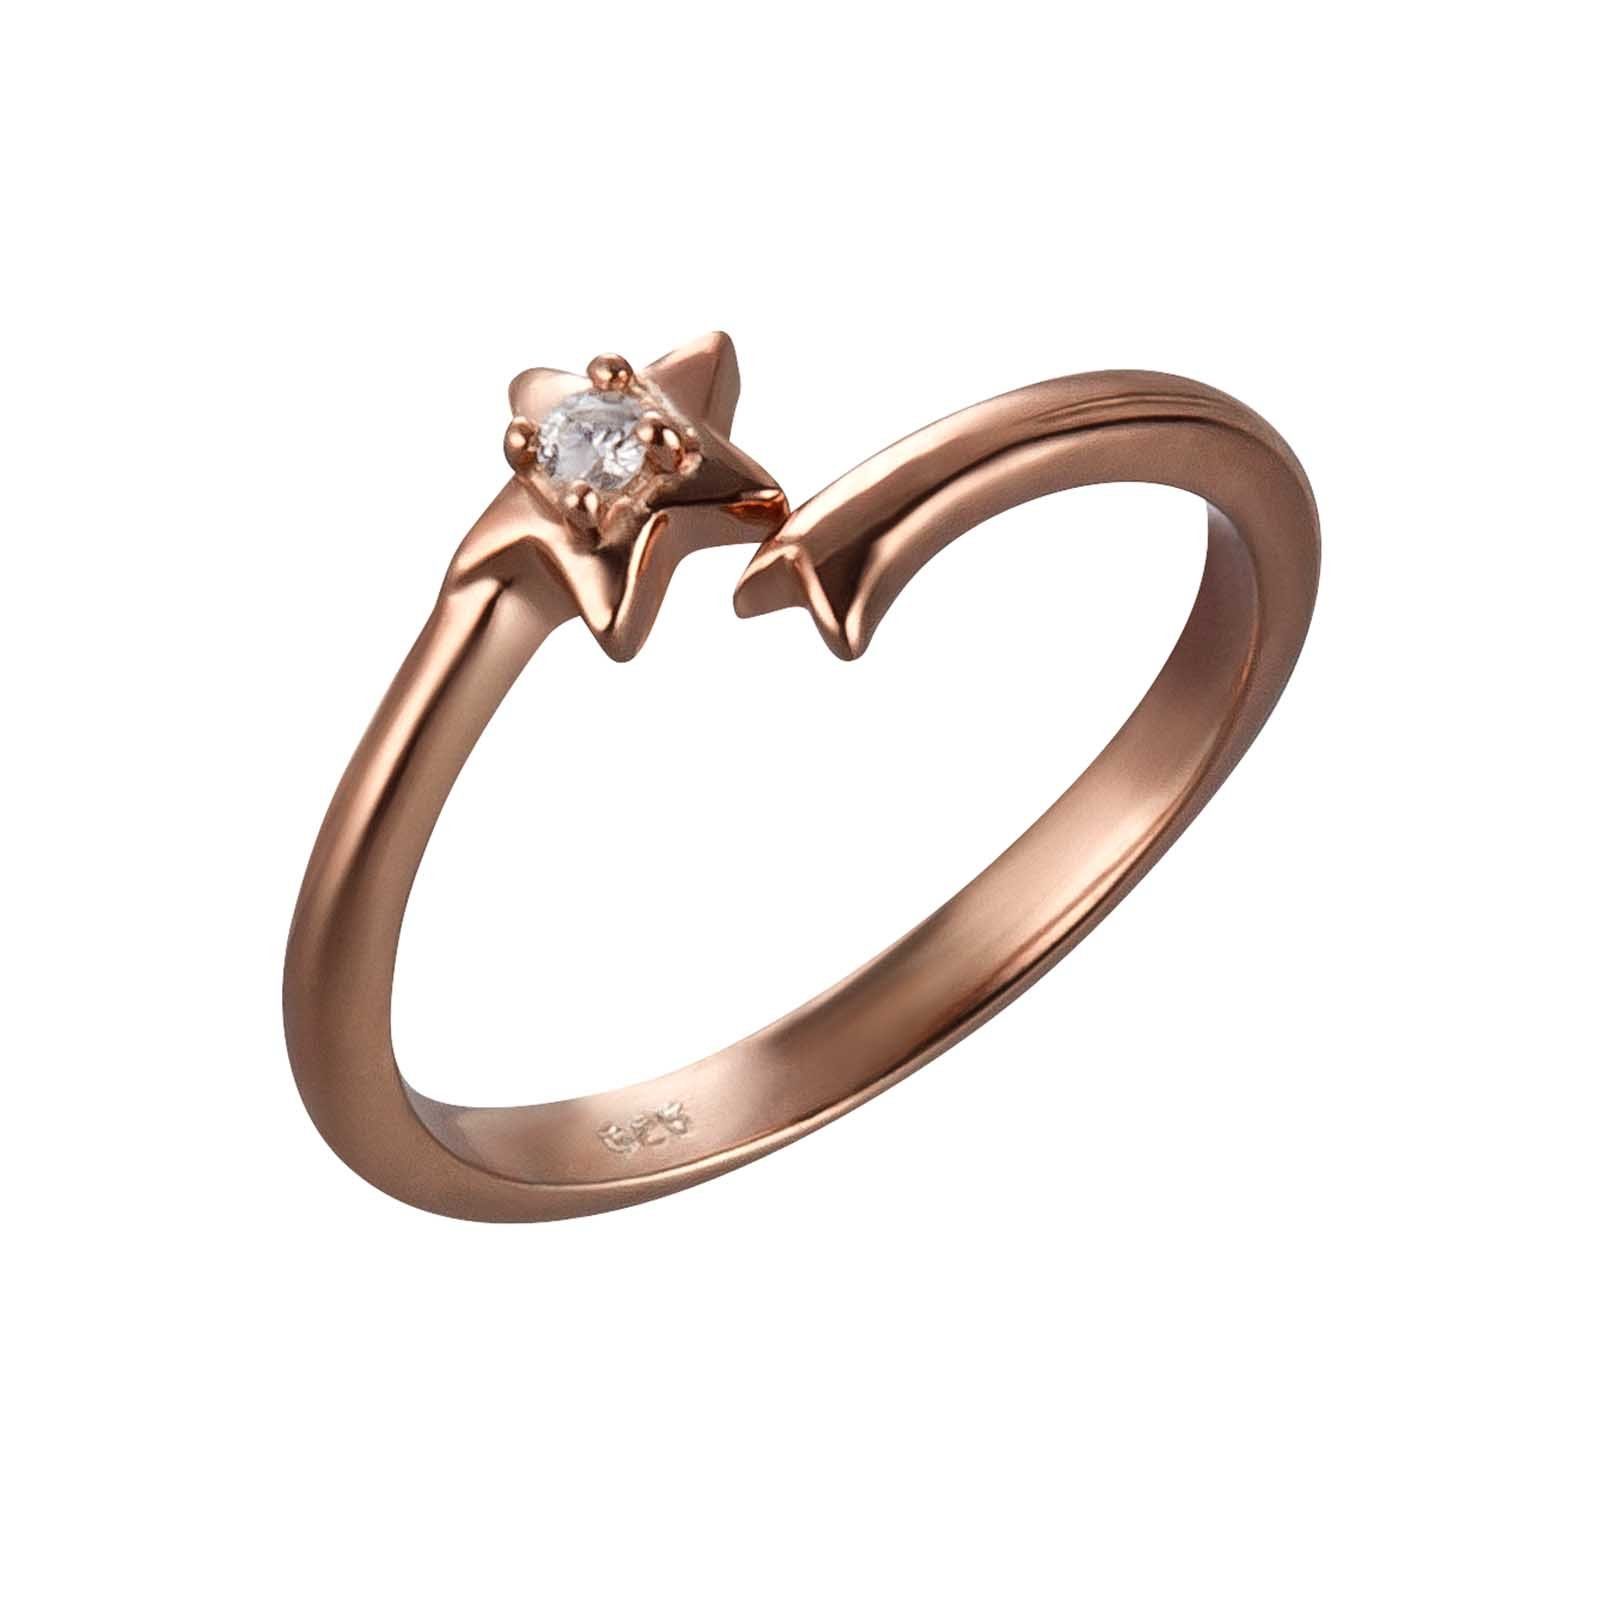 schmuck23 Zehenring »Zeh Ring Stern 925 Silber Rosegold«, Zehring Fuss Ring  Toering online kaufen | OTTO